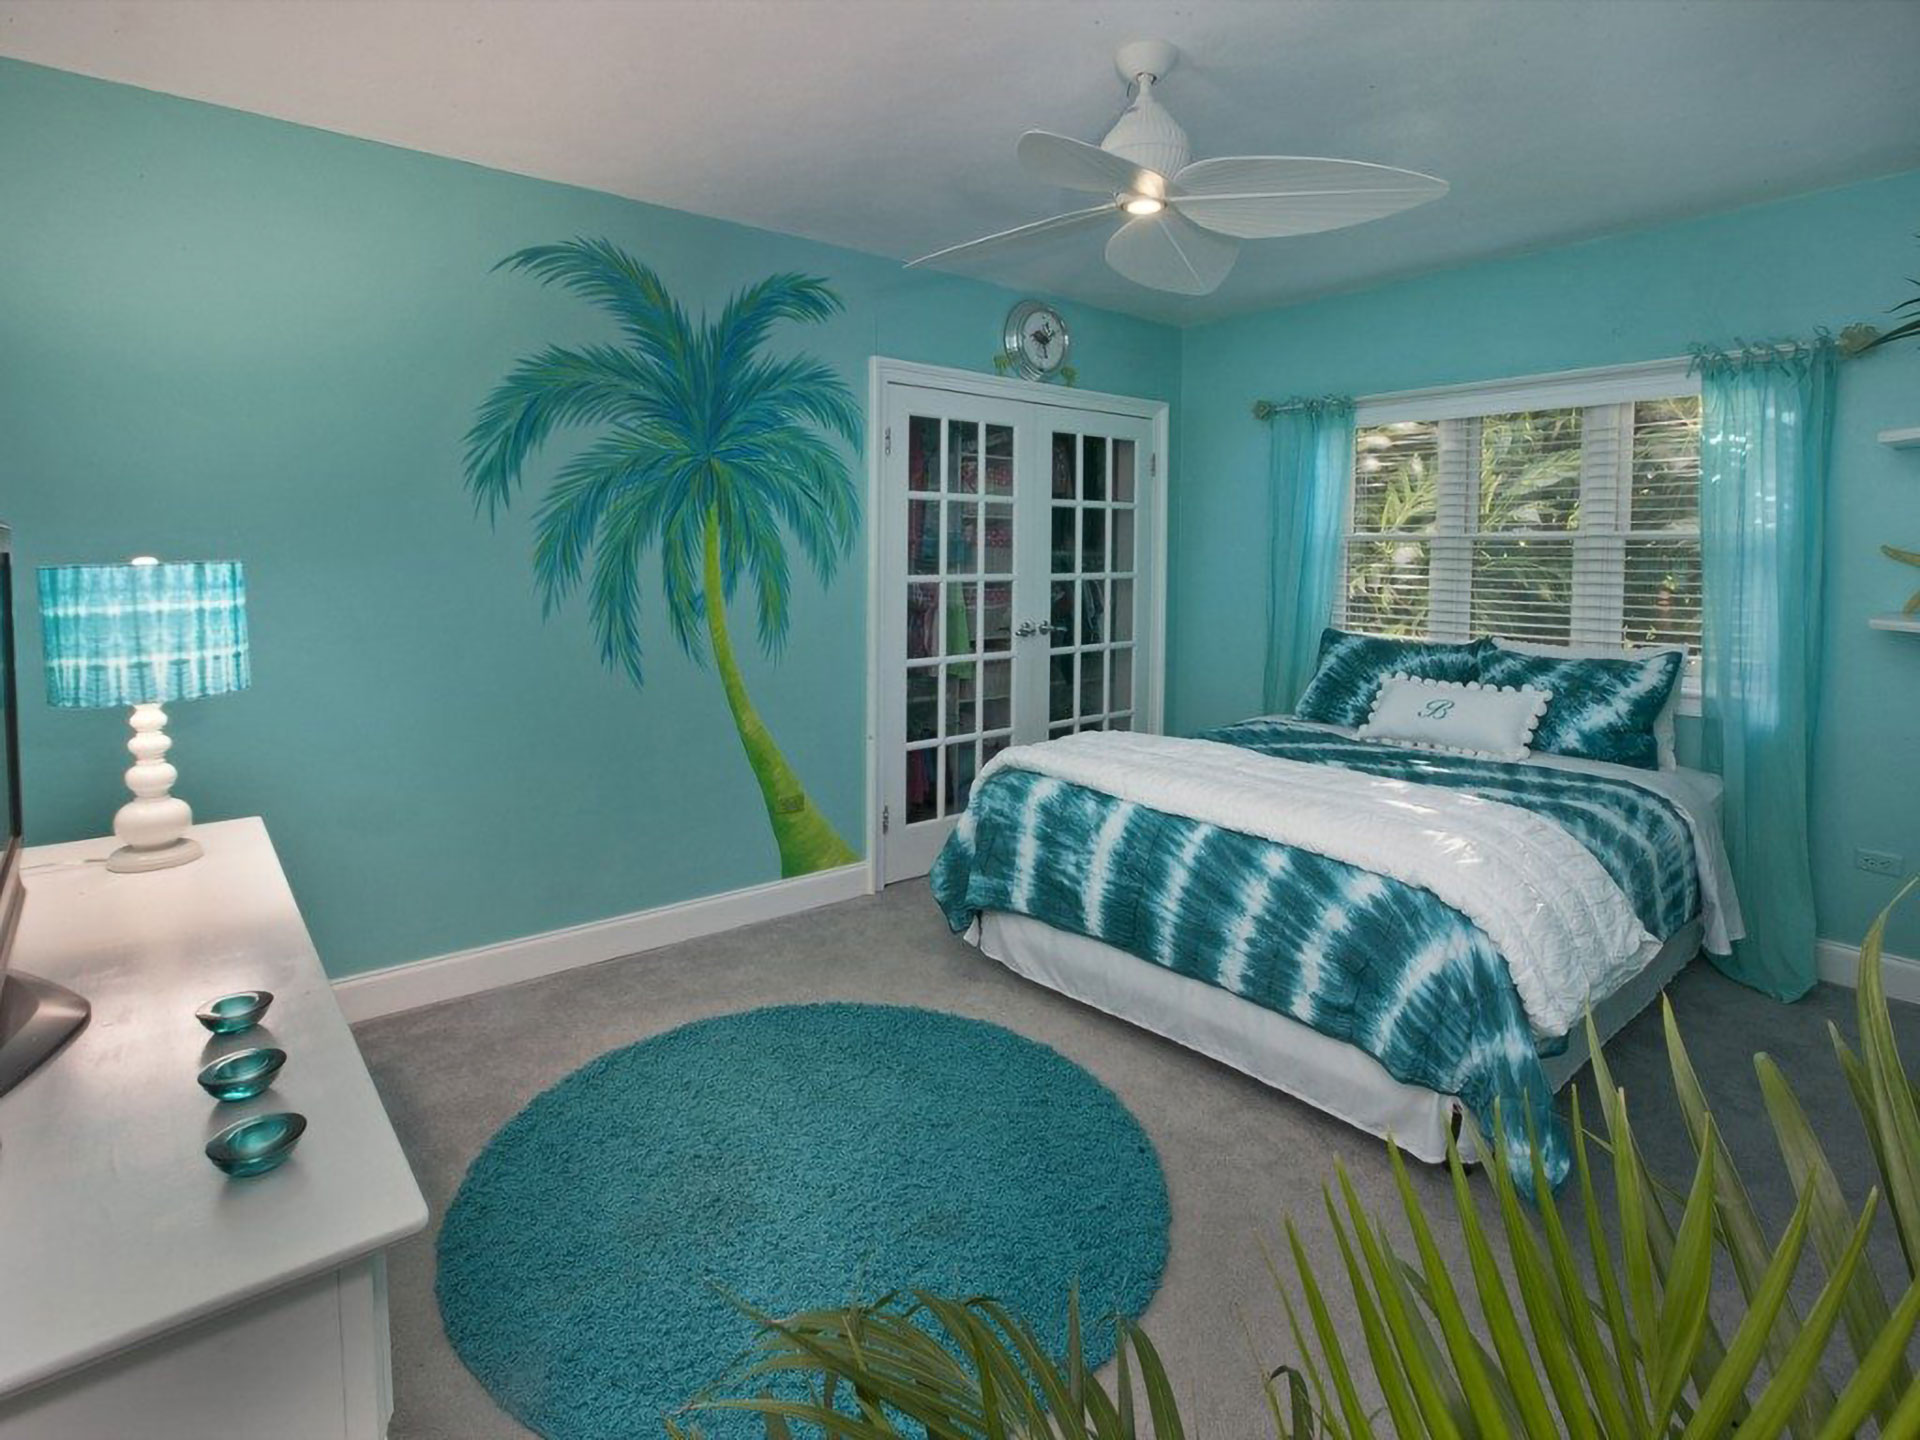 Beach Bedroom Decor Ebay